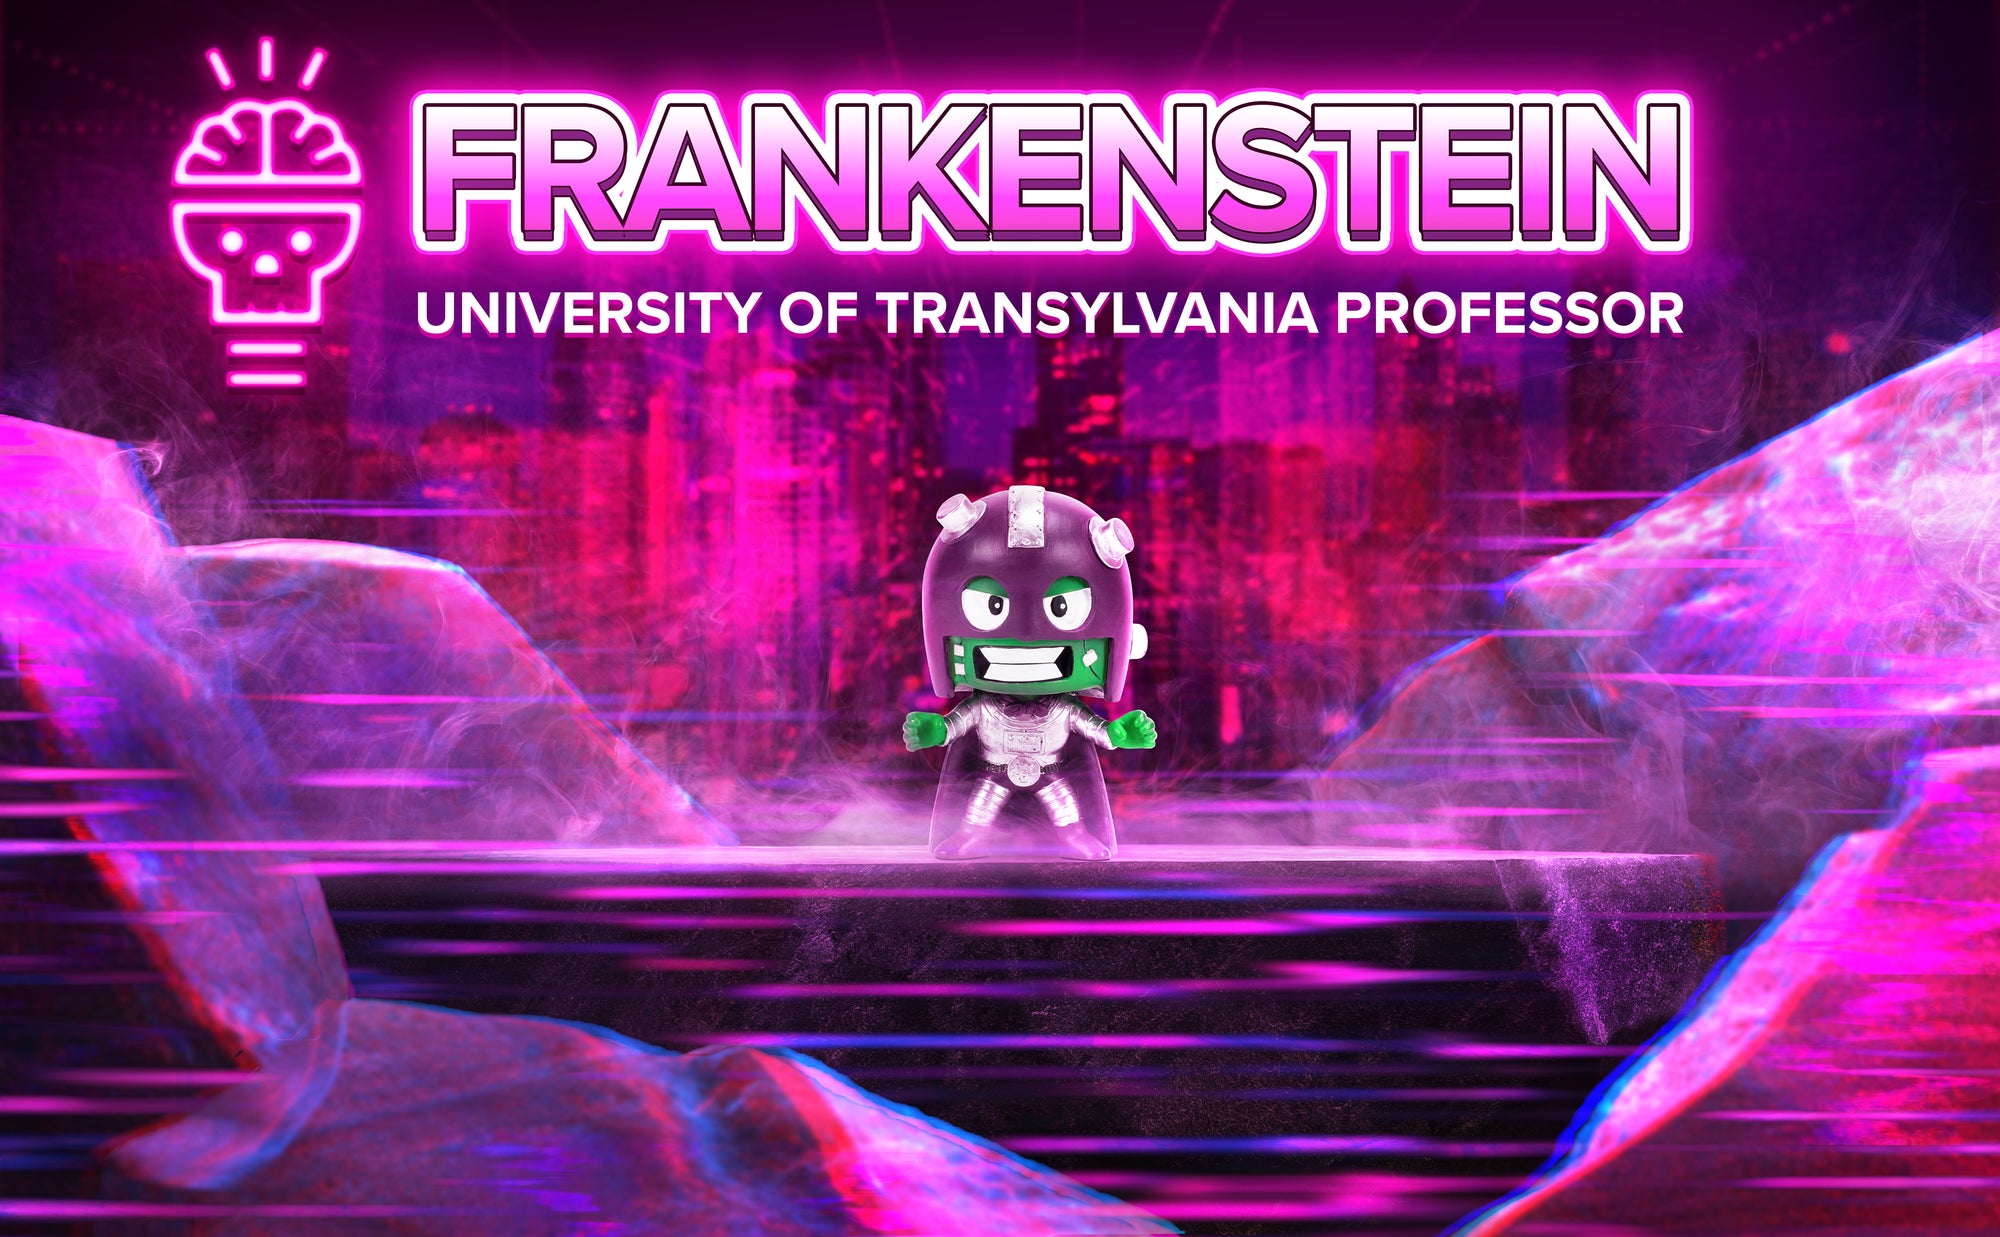 Frankenstein Smashcraft collectible in realistic futuristic city, Transylvania. Text "Frankenstein, University of Transylvania Professor" and Frankenstein's skull brain logo